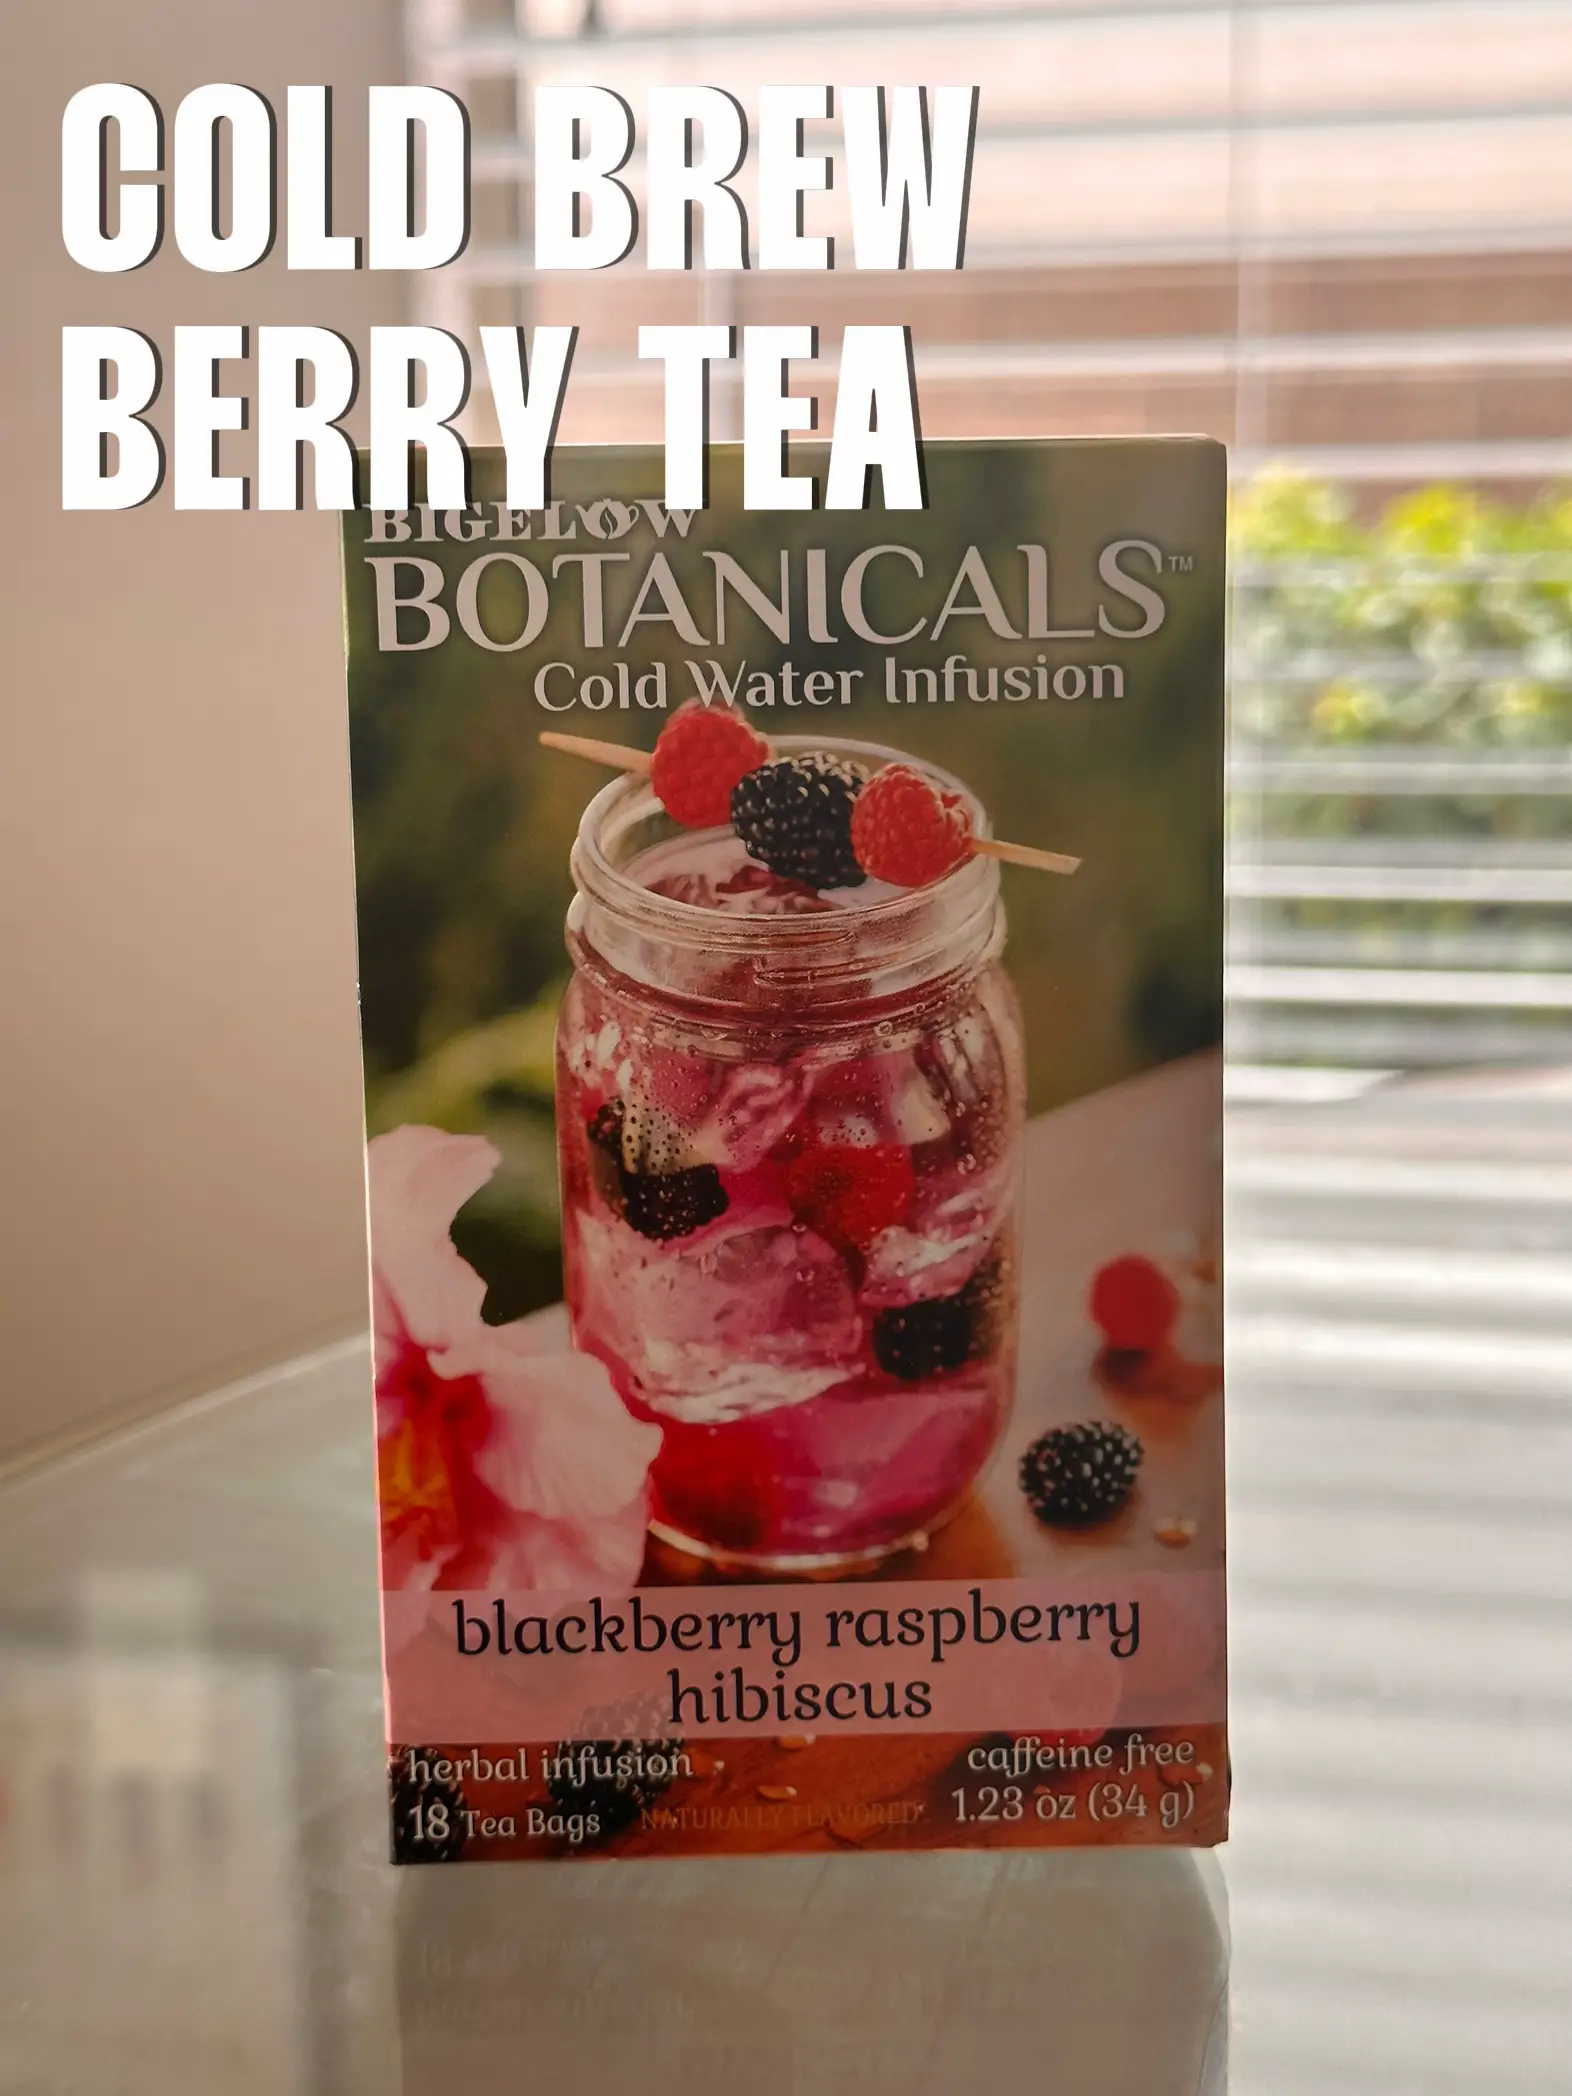 Bigelow Botanicals, Blackberry Raspberry Hibiscus Cold Water